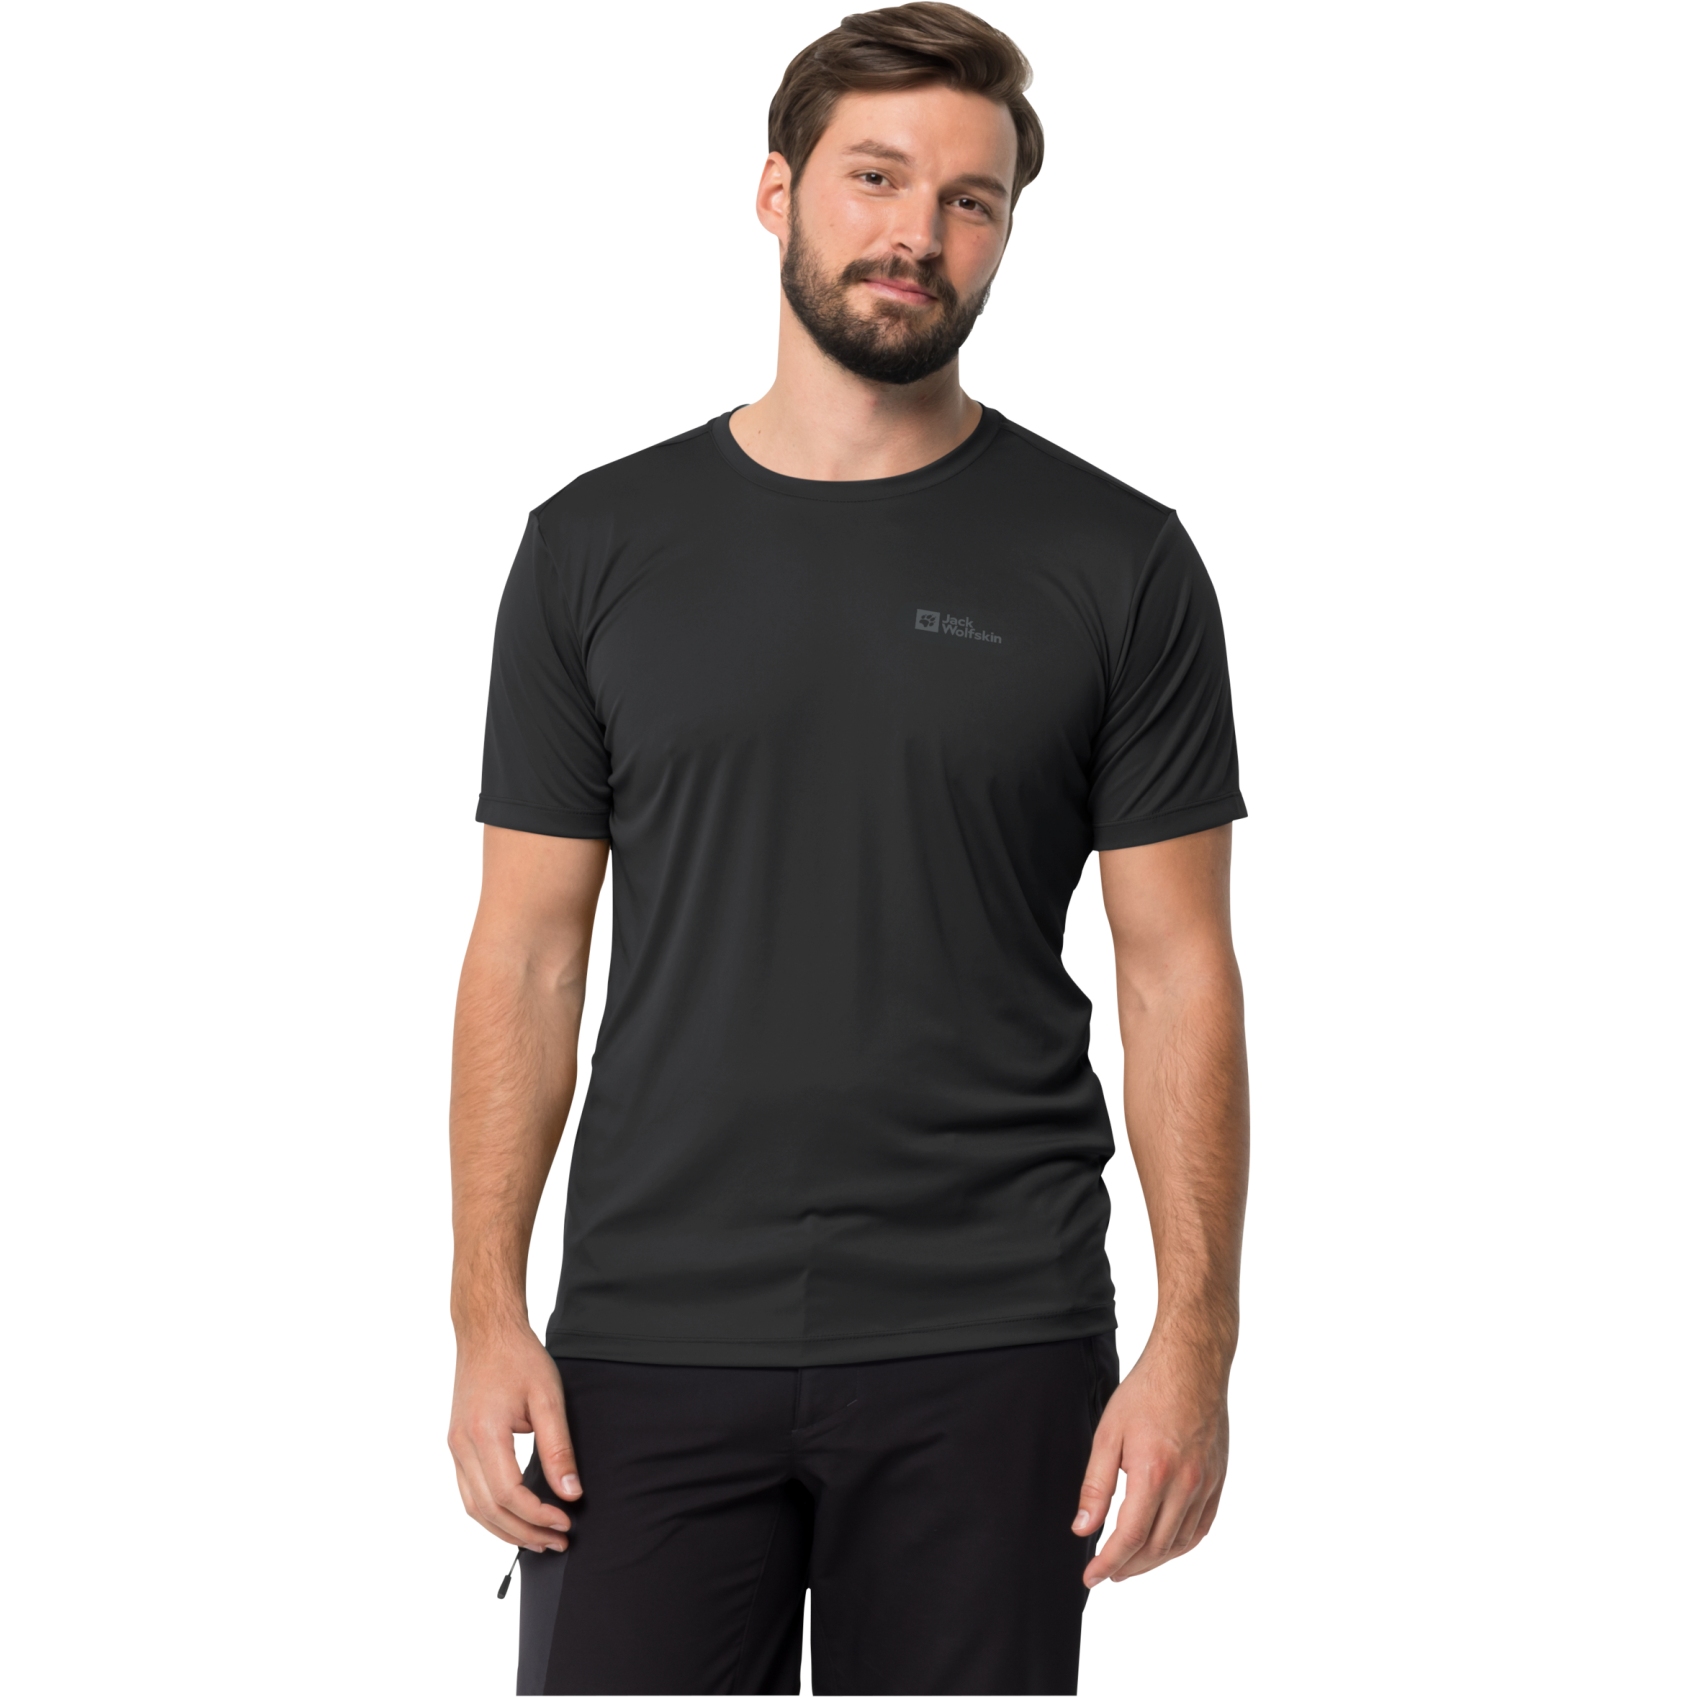 Jack Wolfskin Tech T-Shirt Men - black | BIKE24